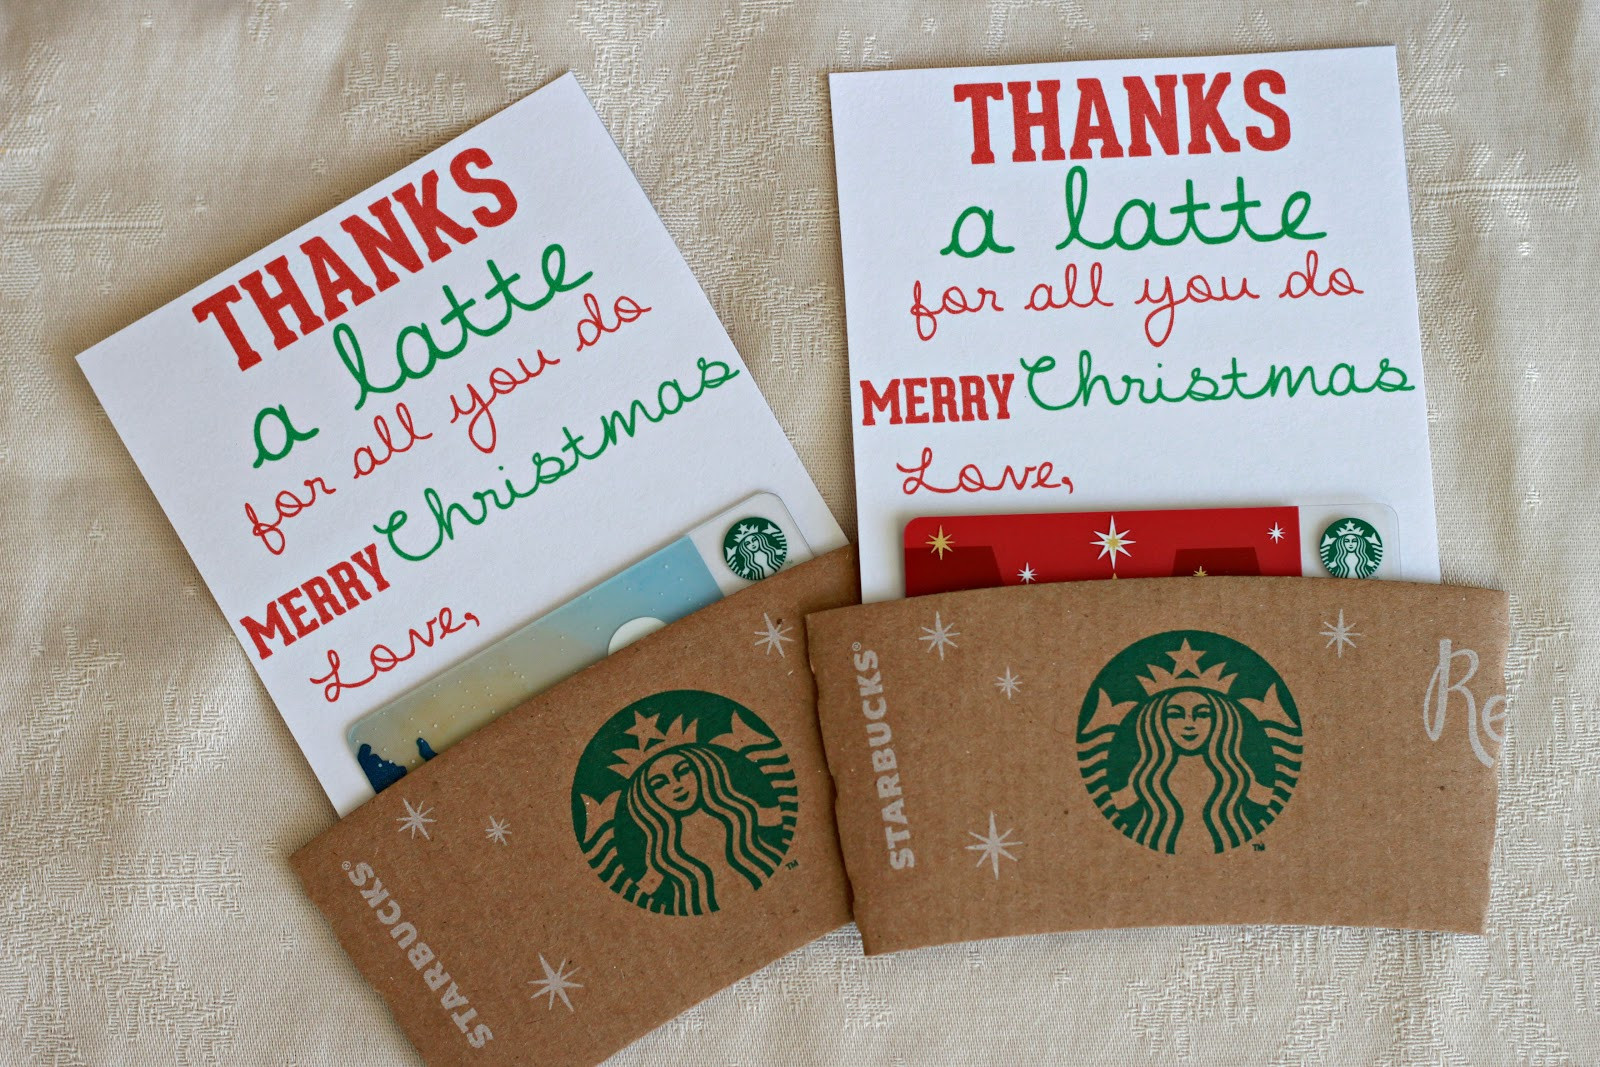 Classroom Christmas Gift Ideas
 Man Starkey thanks a latte